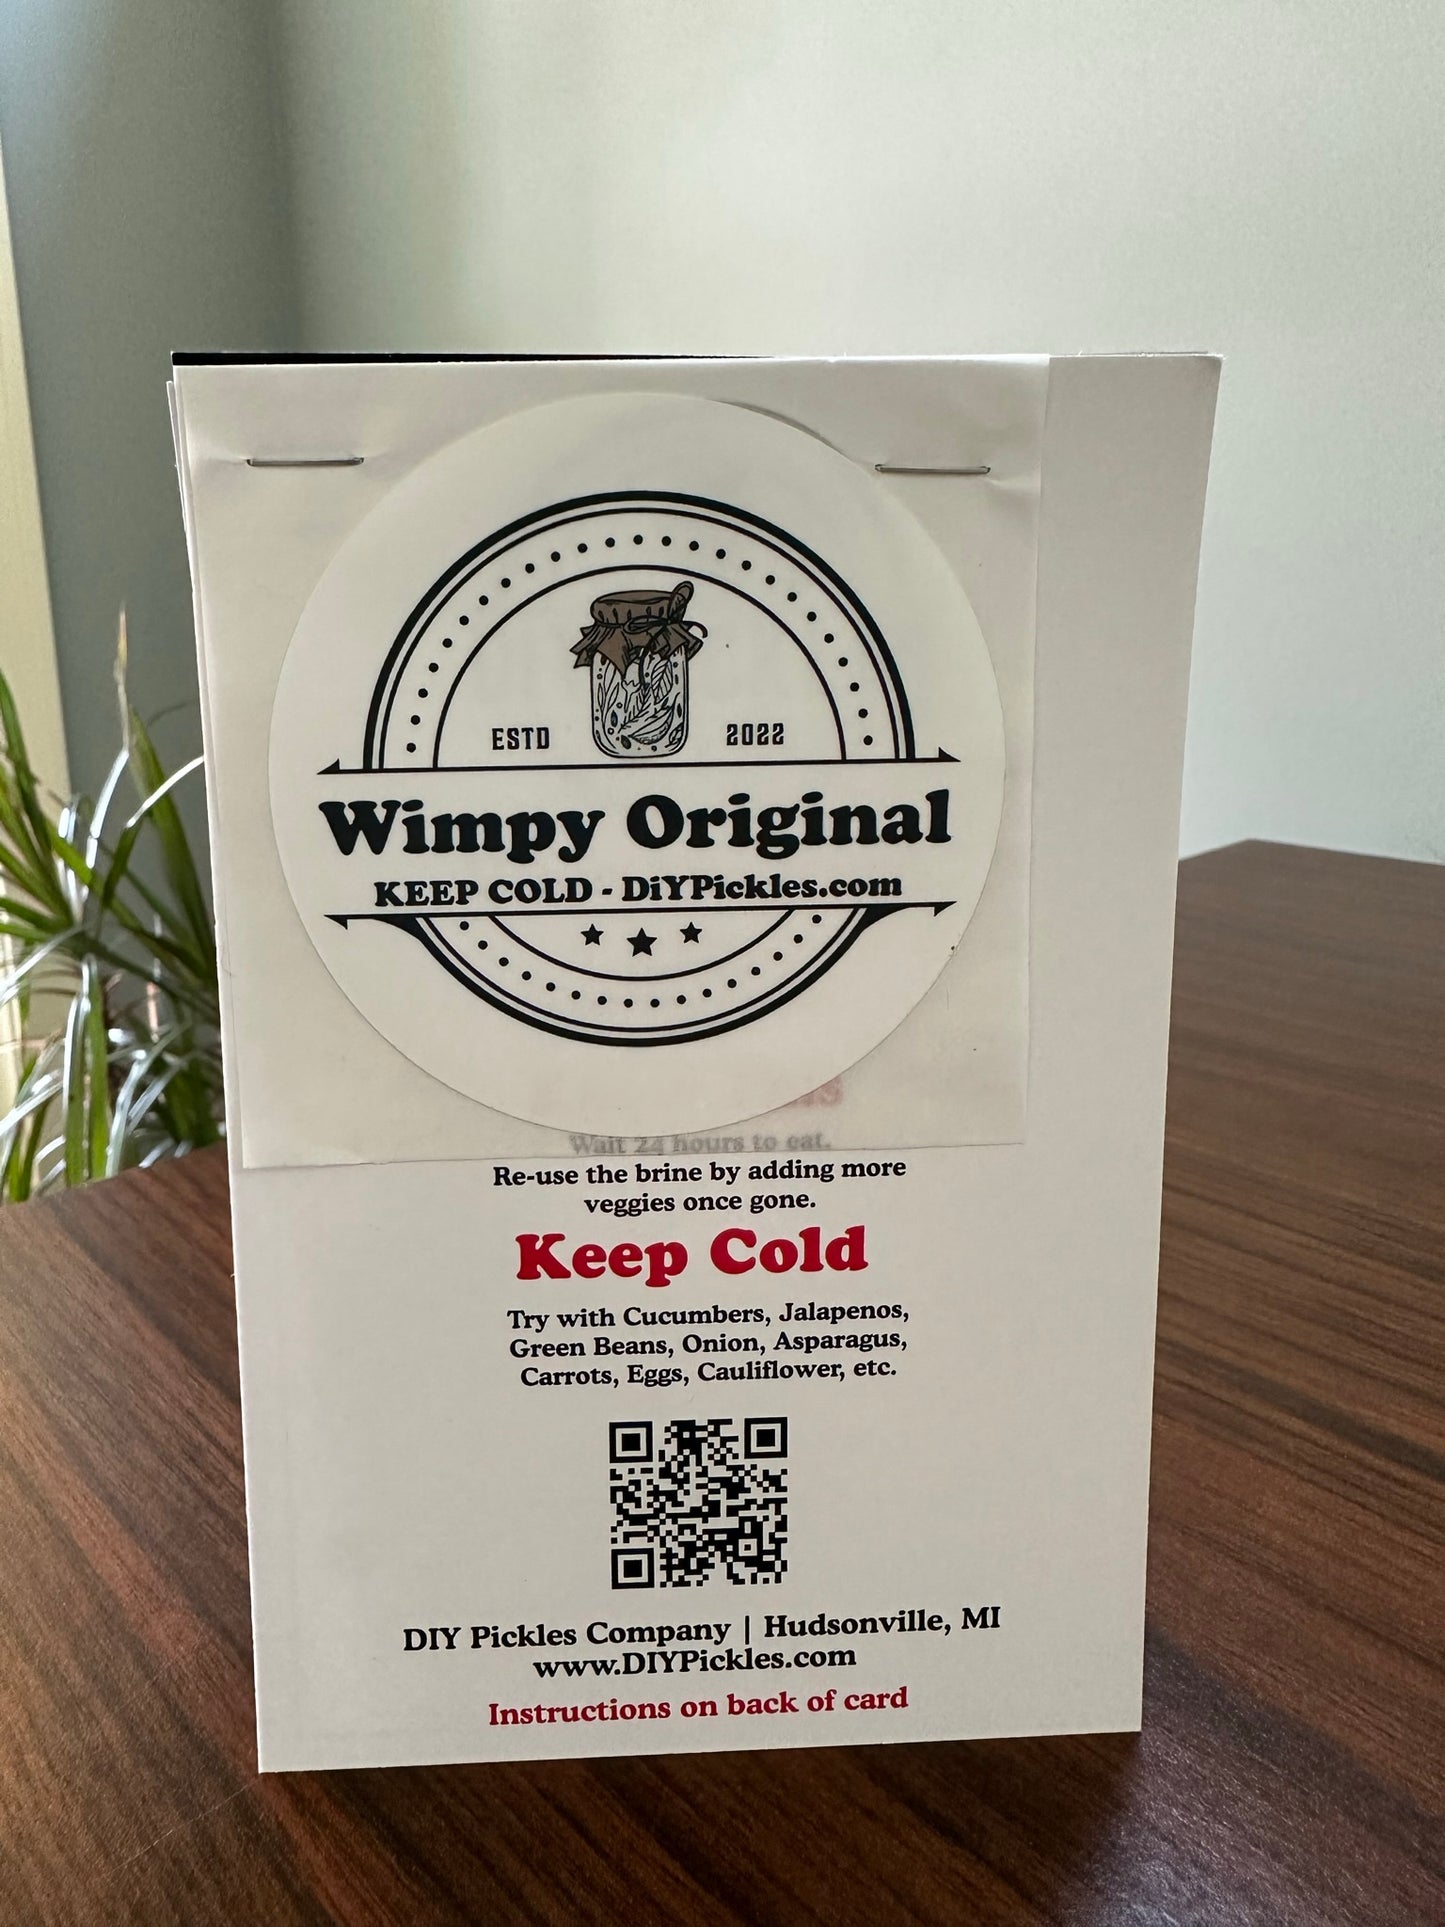 DIY Pickles Wimpy Original Spice Kit